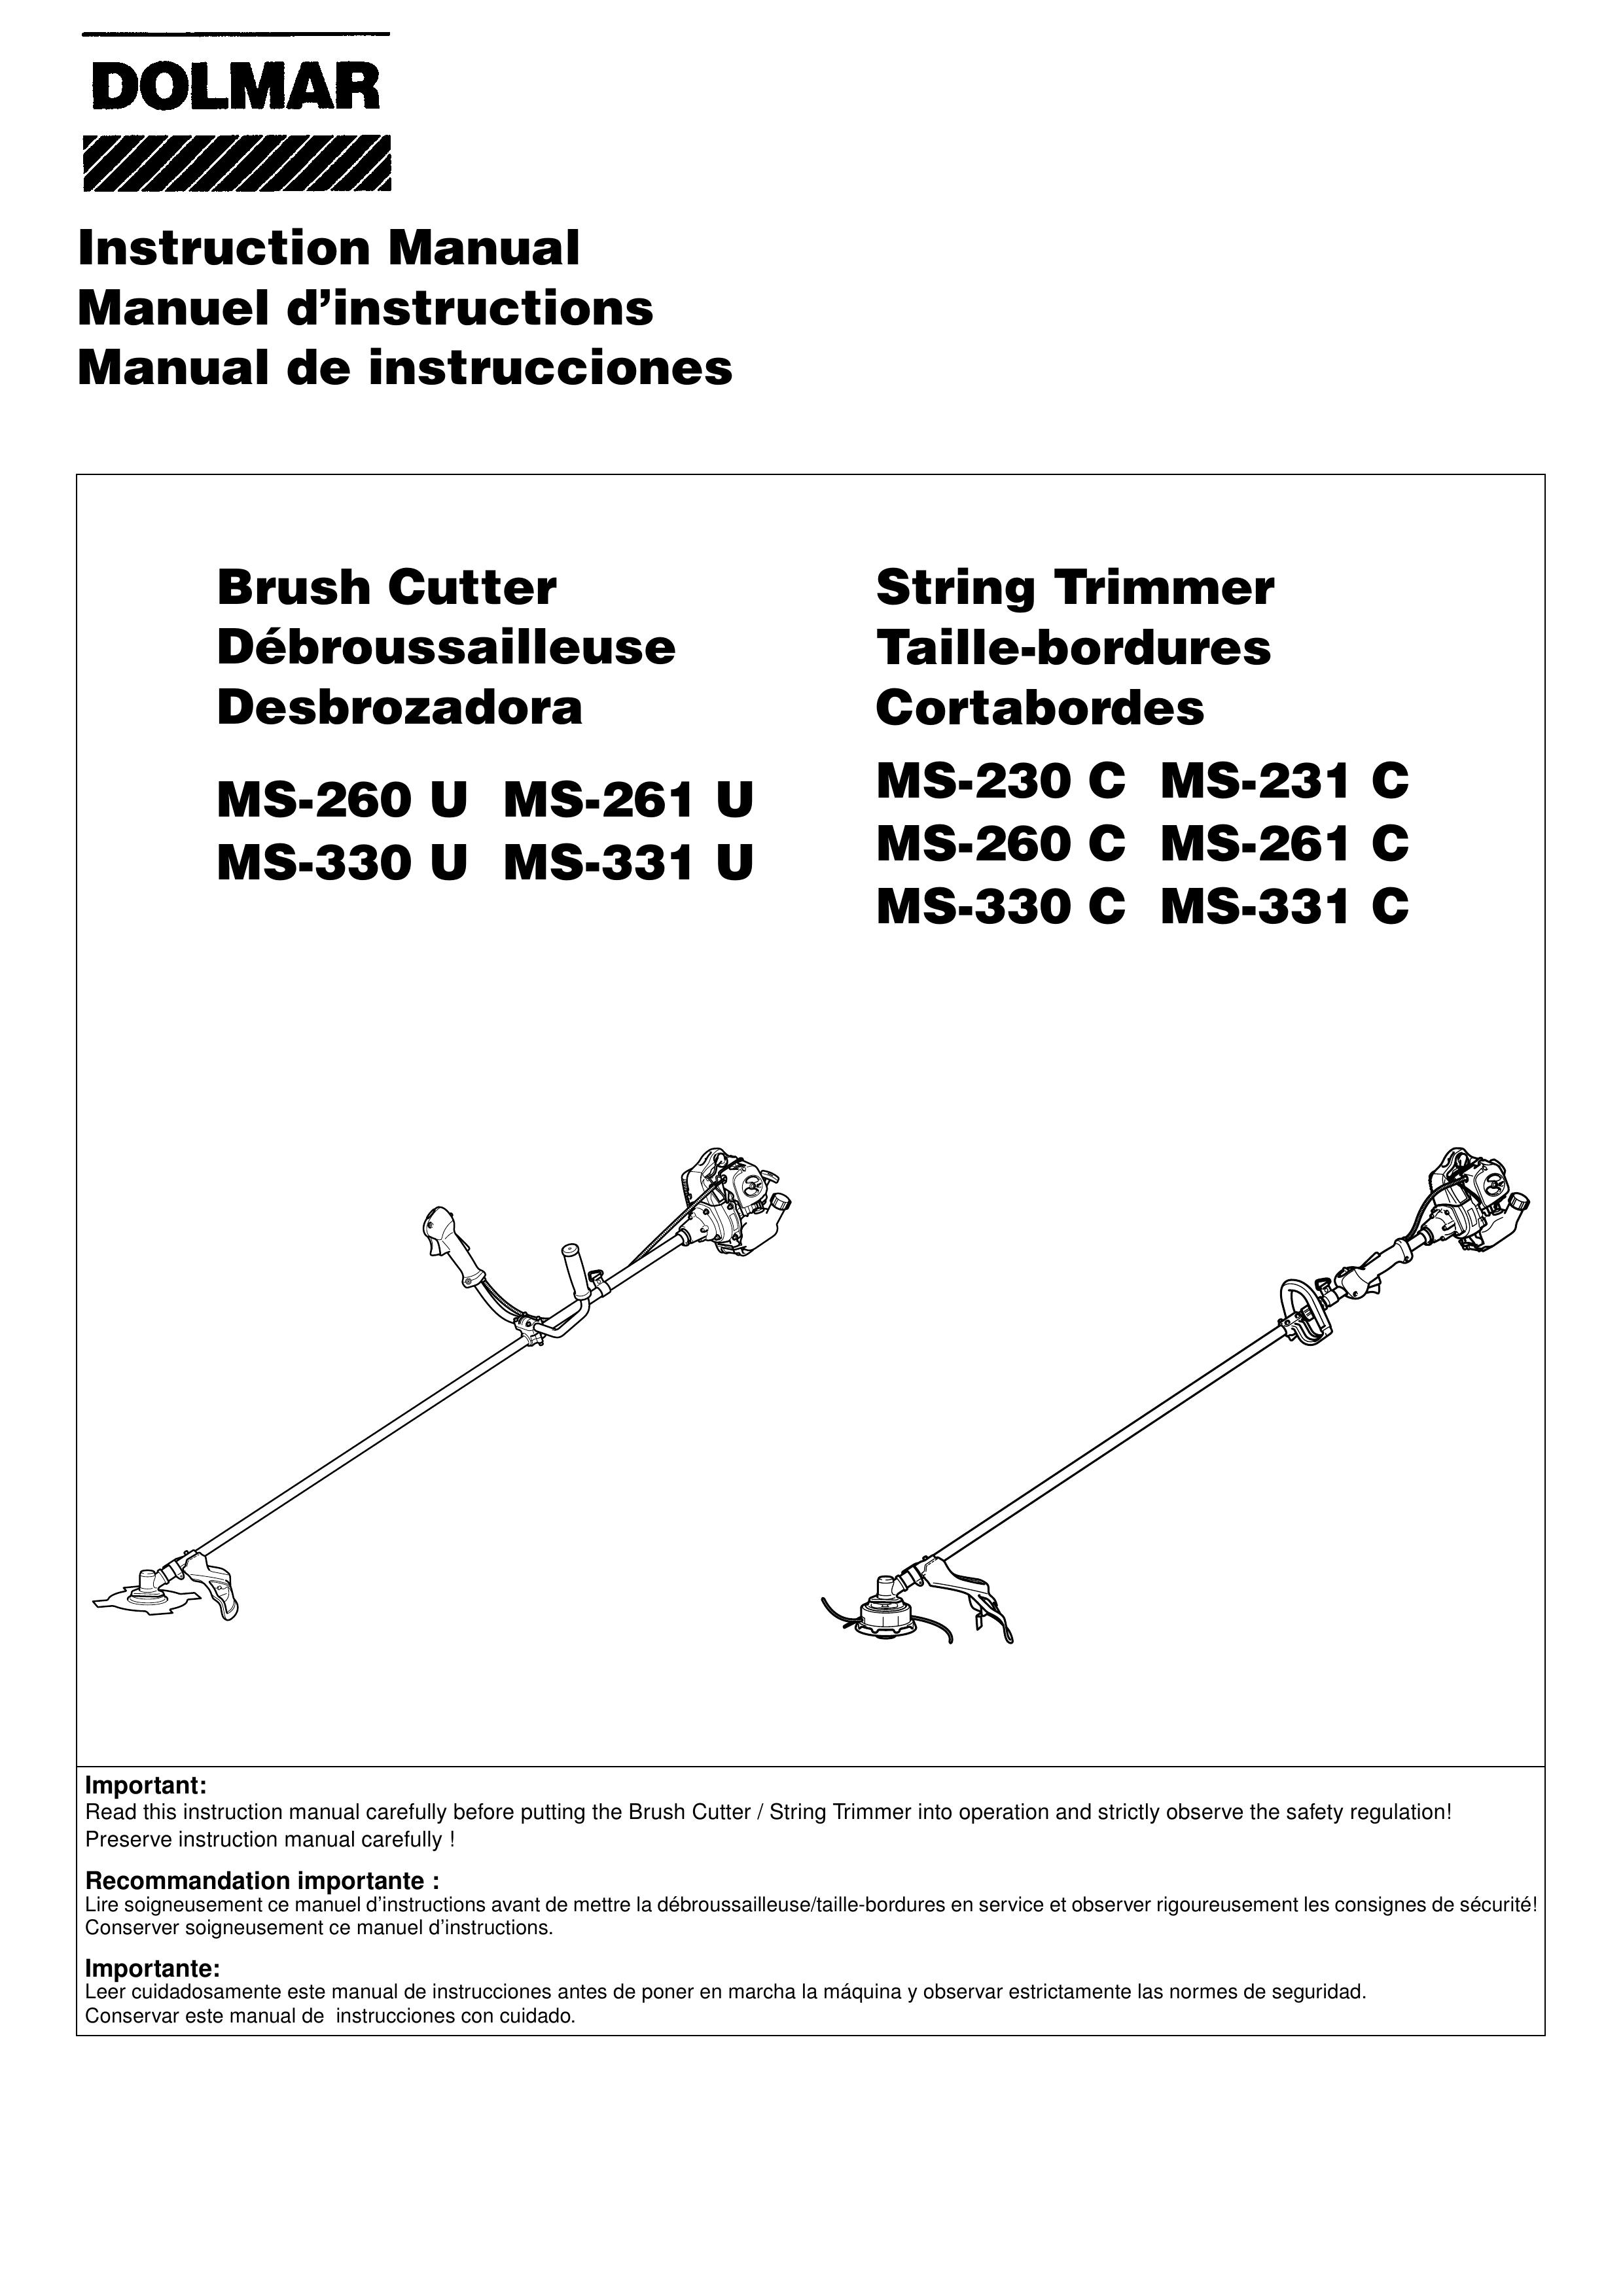 Dolmar MS-330 C Brush Cutter User Manual